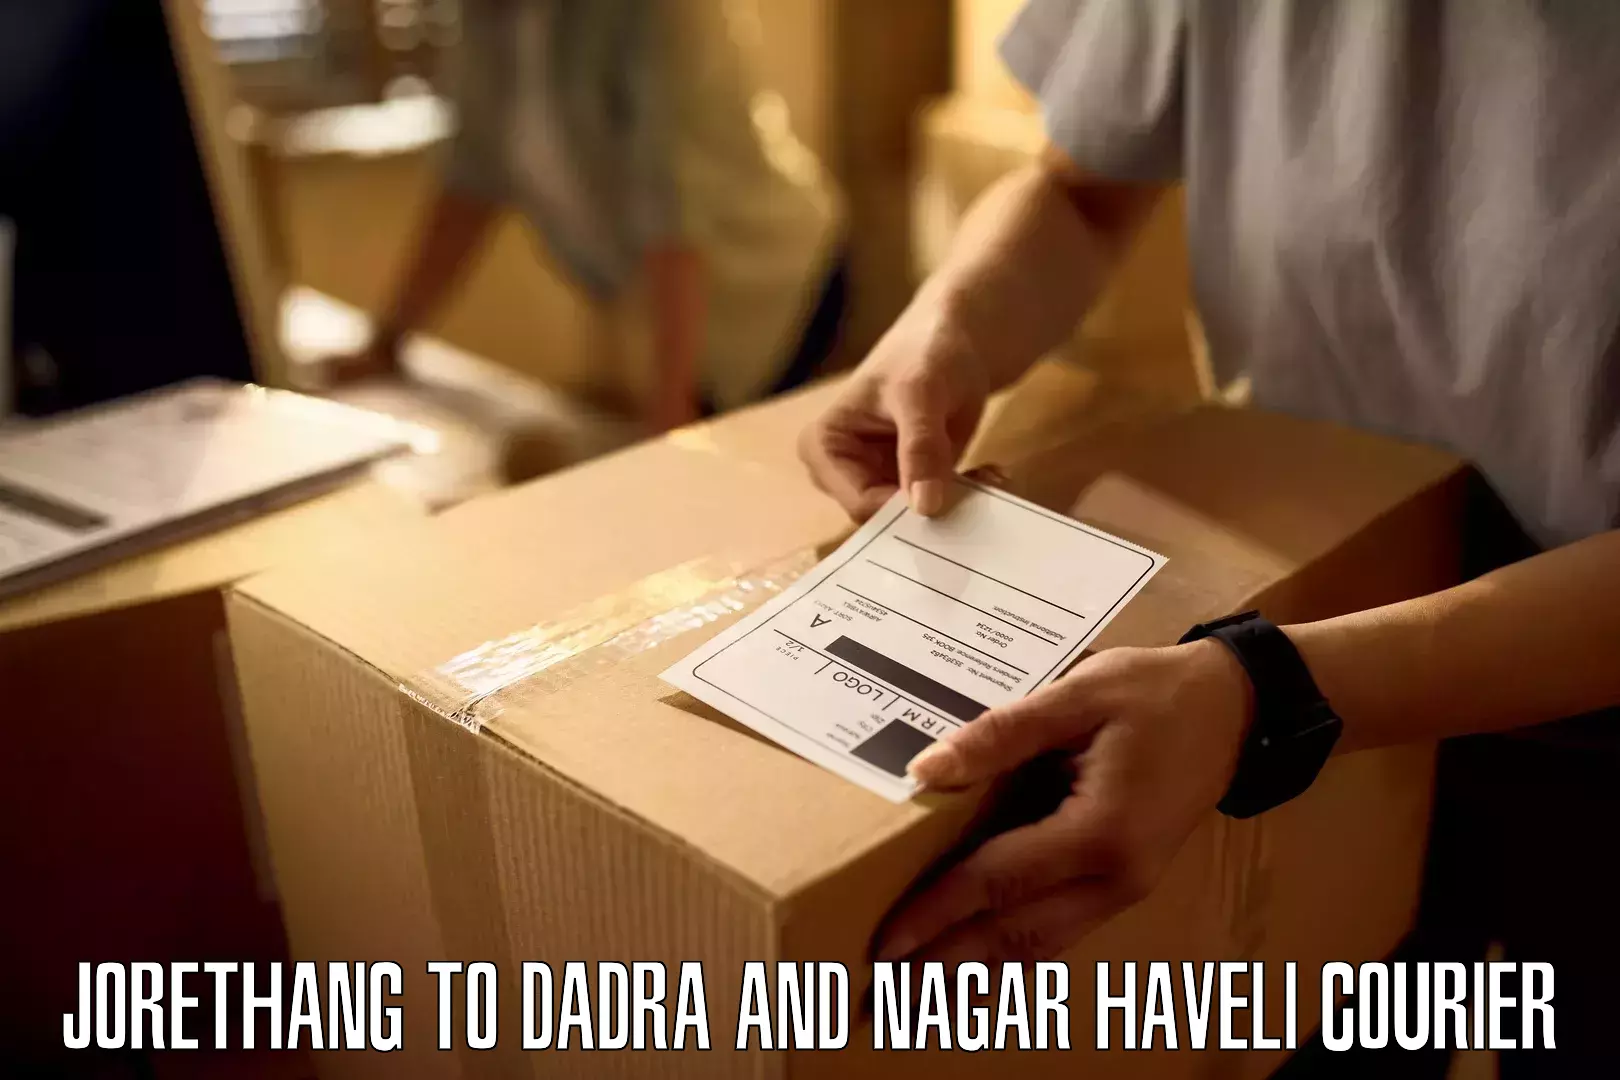 Professional courier handling Jorethang to Dadra and Nagar Haveli